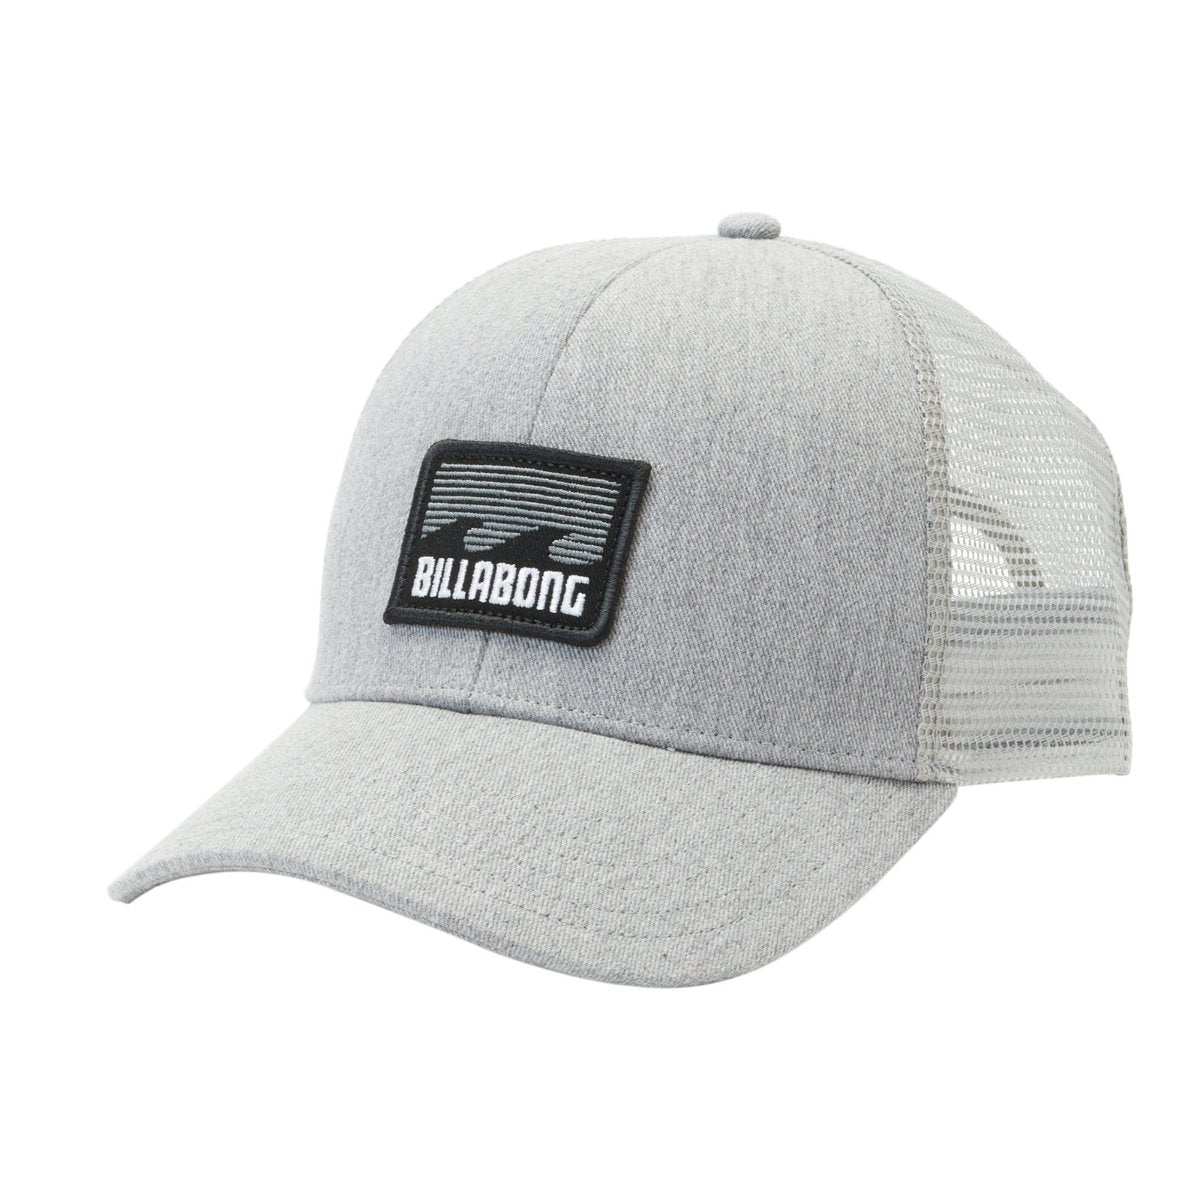 Billabong Walled Trucker Hat - Grey / Black